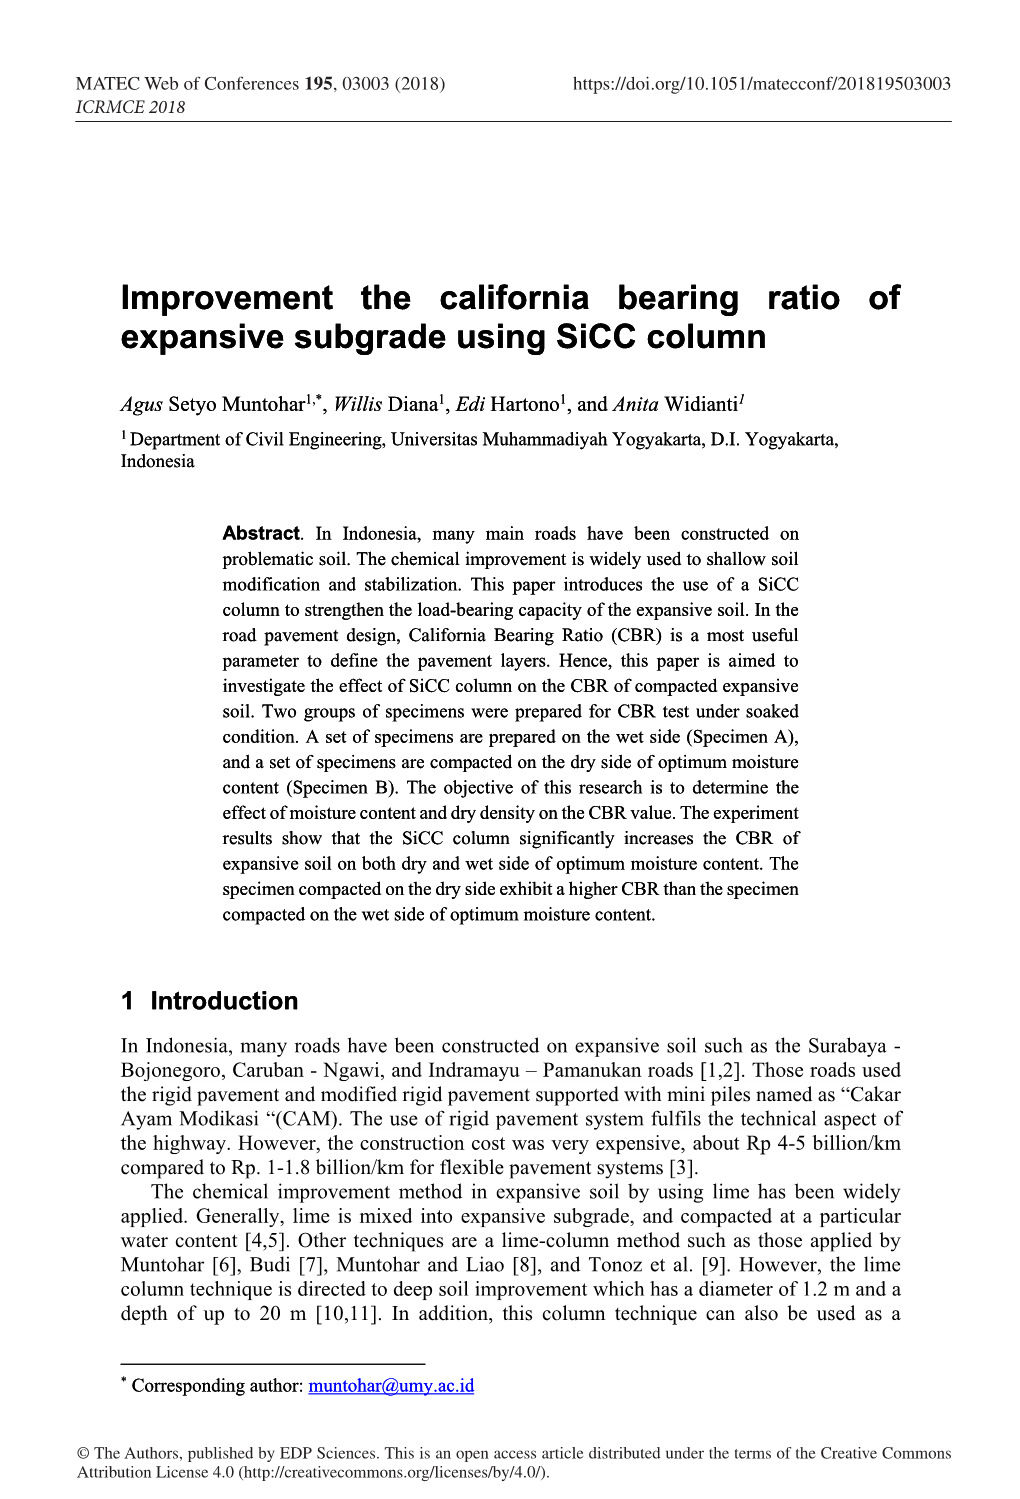 Improvement the California Bearing Ratio of Expansive Subgrade Using Sicc Column